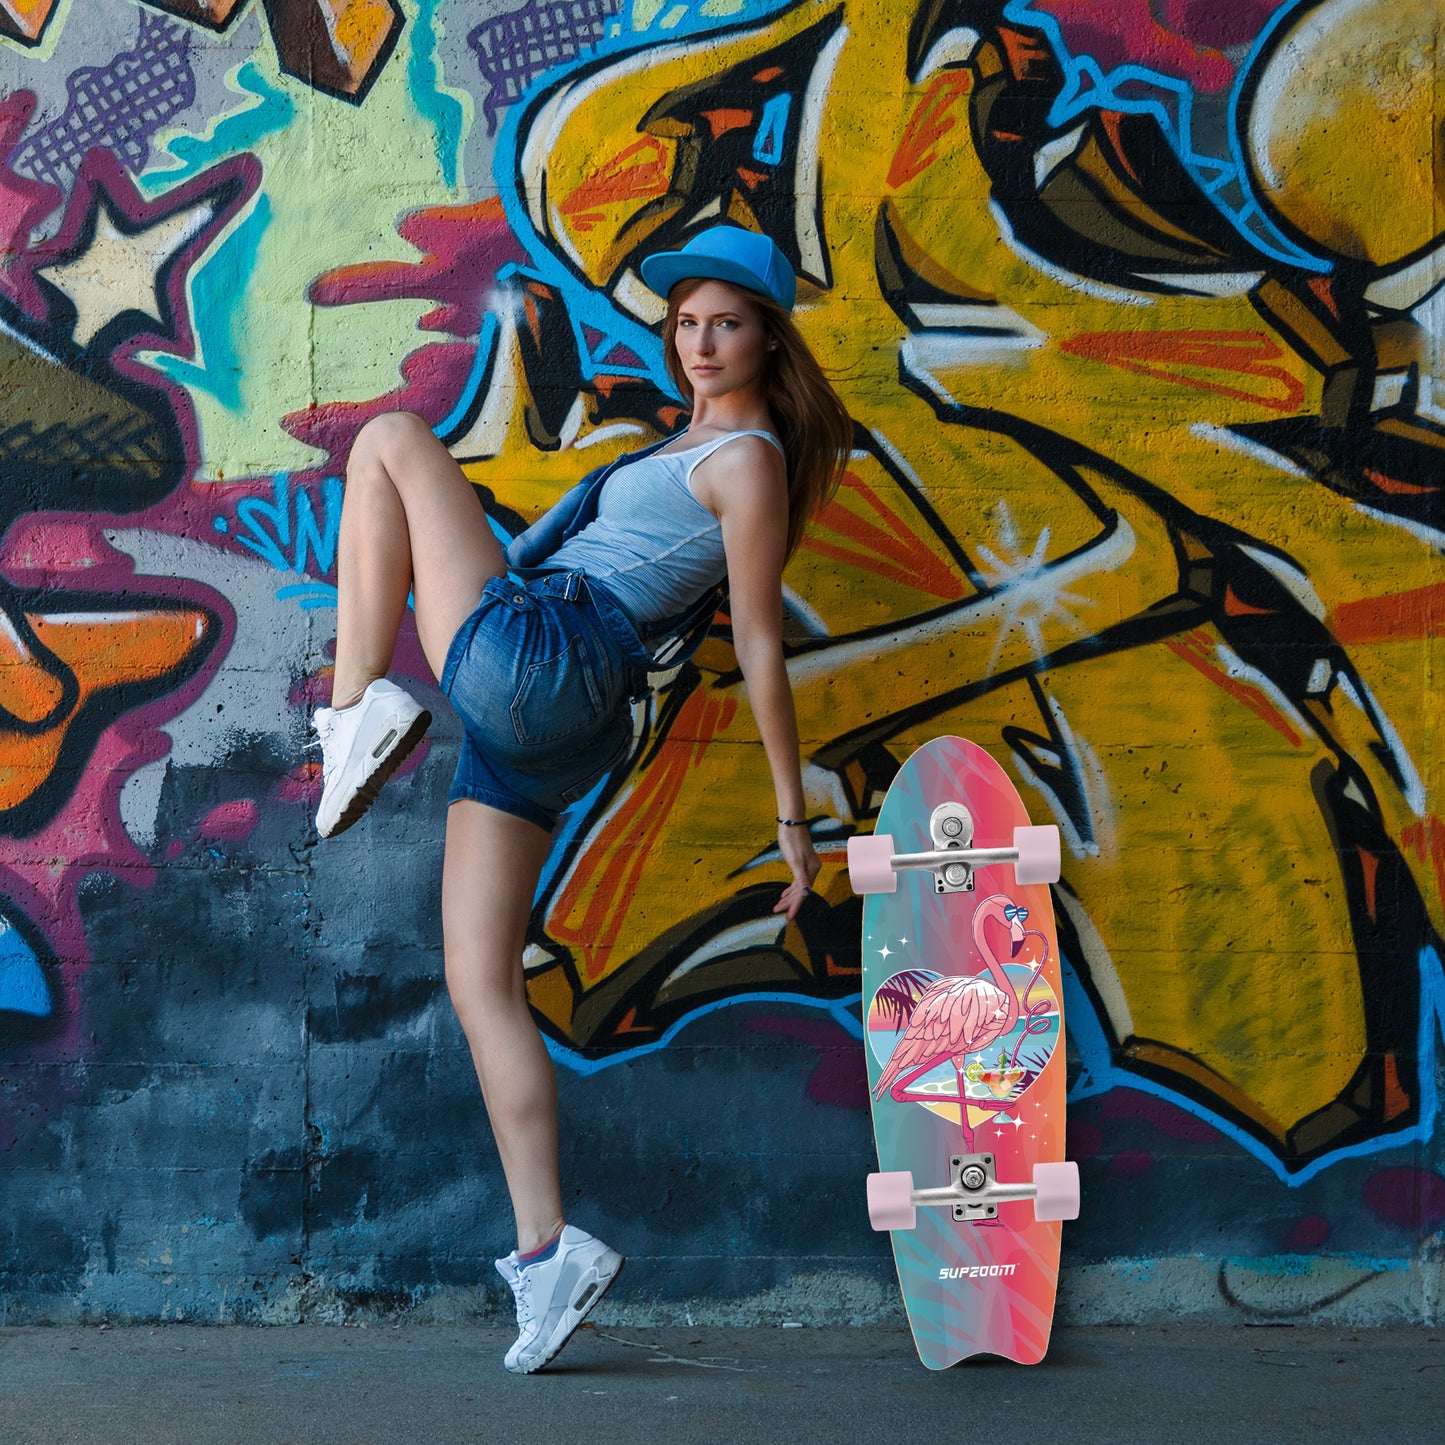 32'' Flamingo Surf Skateboard